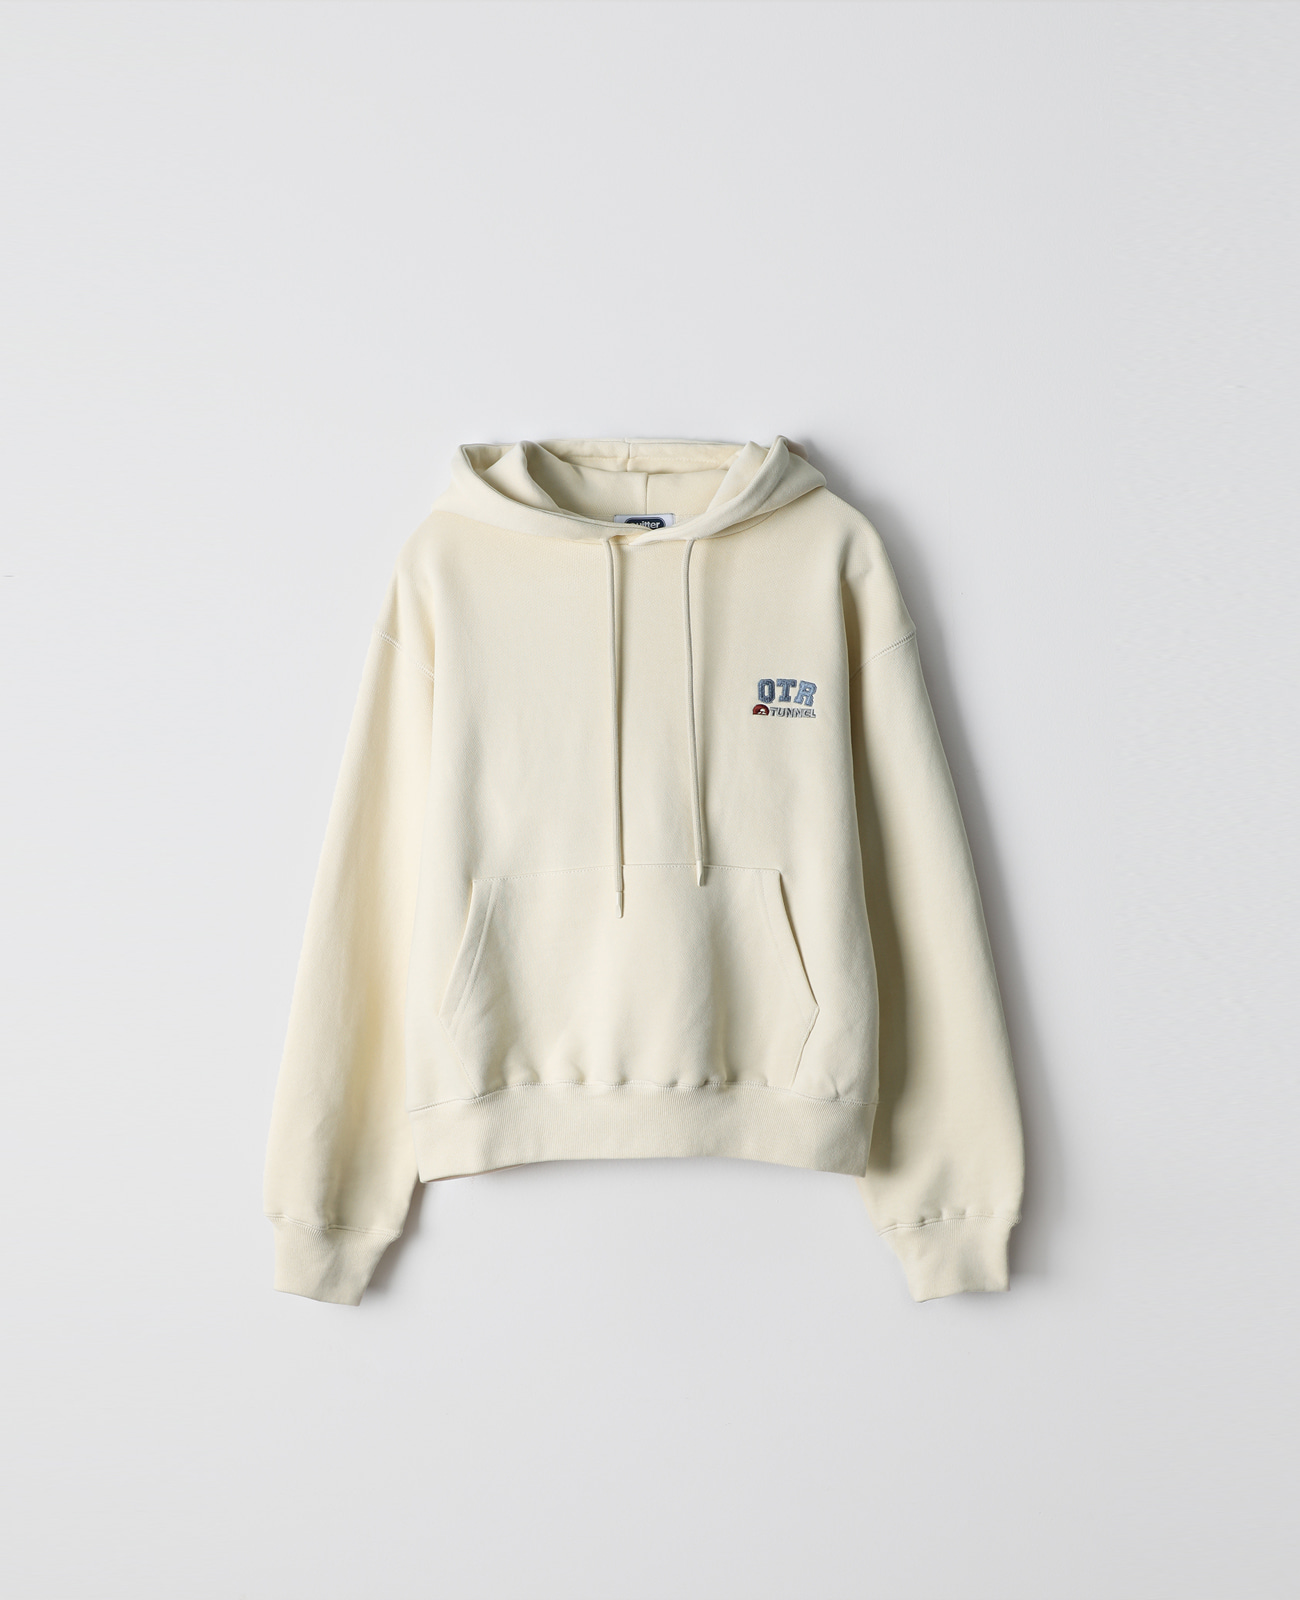 QTR hoodie (ivory)